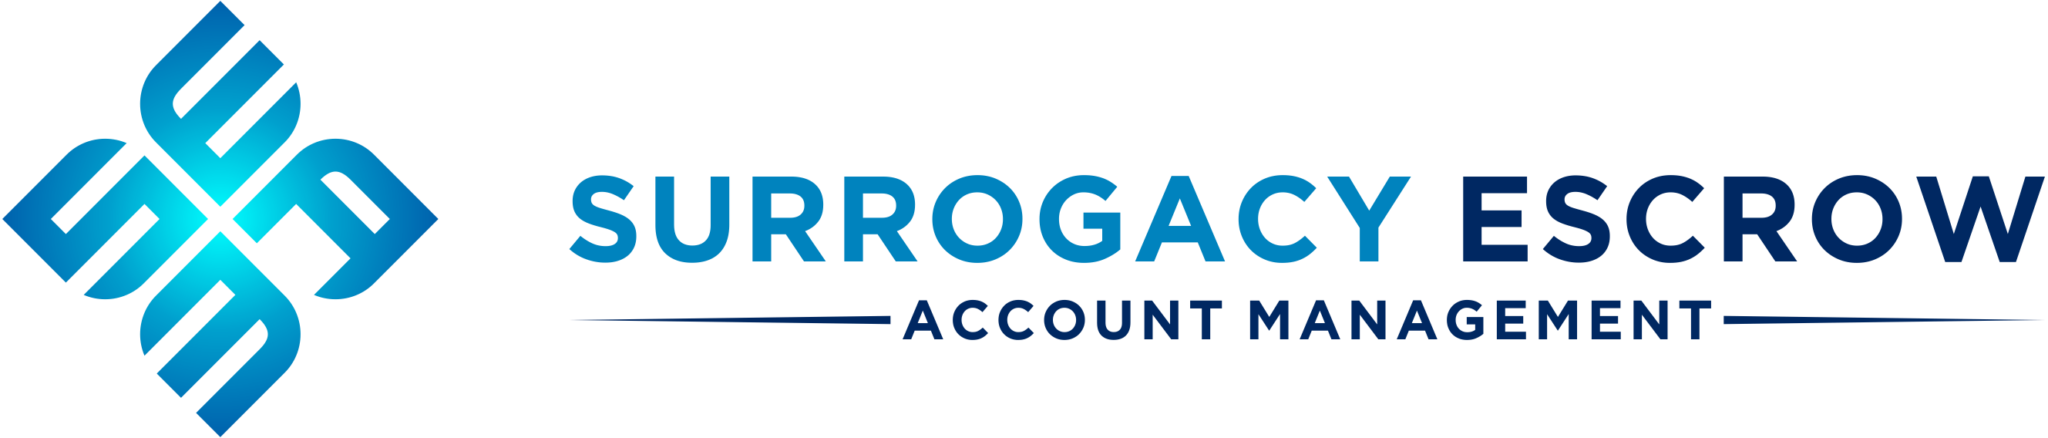 Surrogacy Escrow Account Management